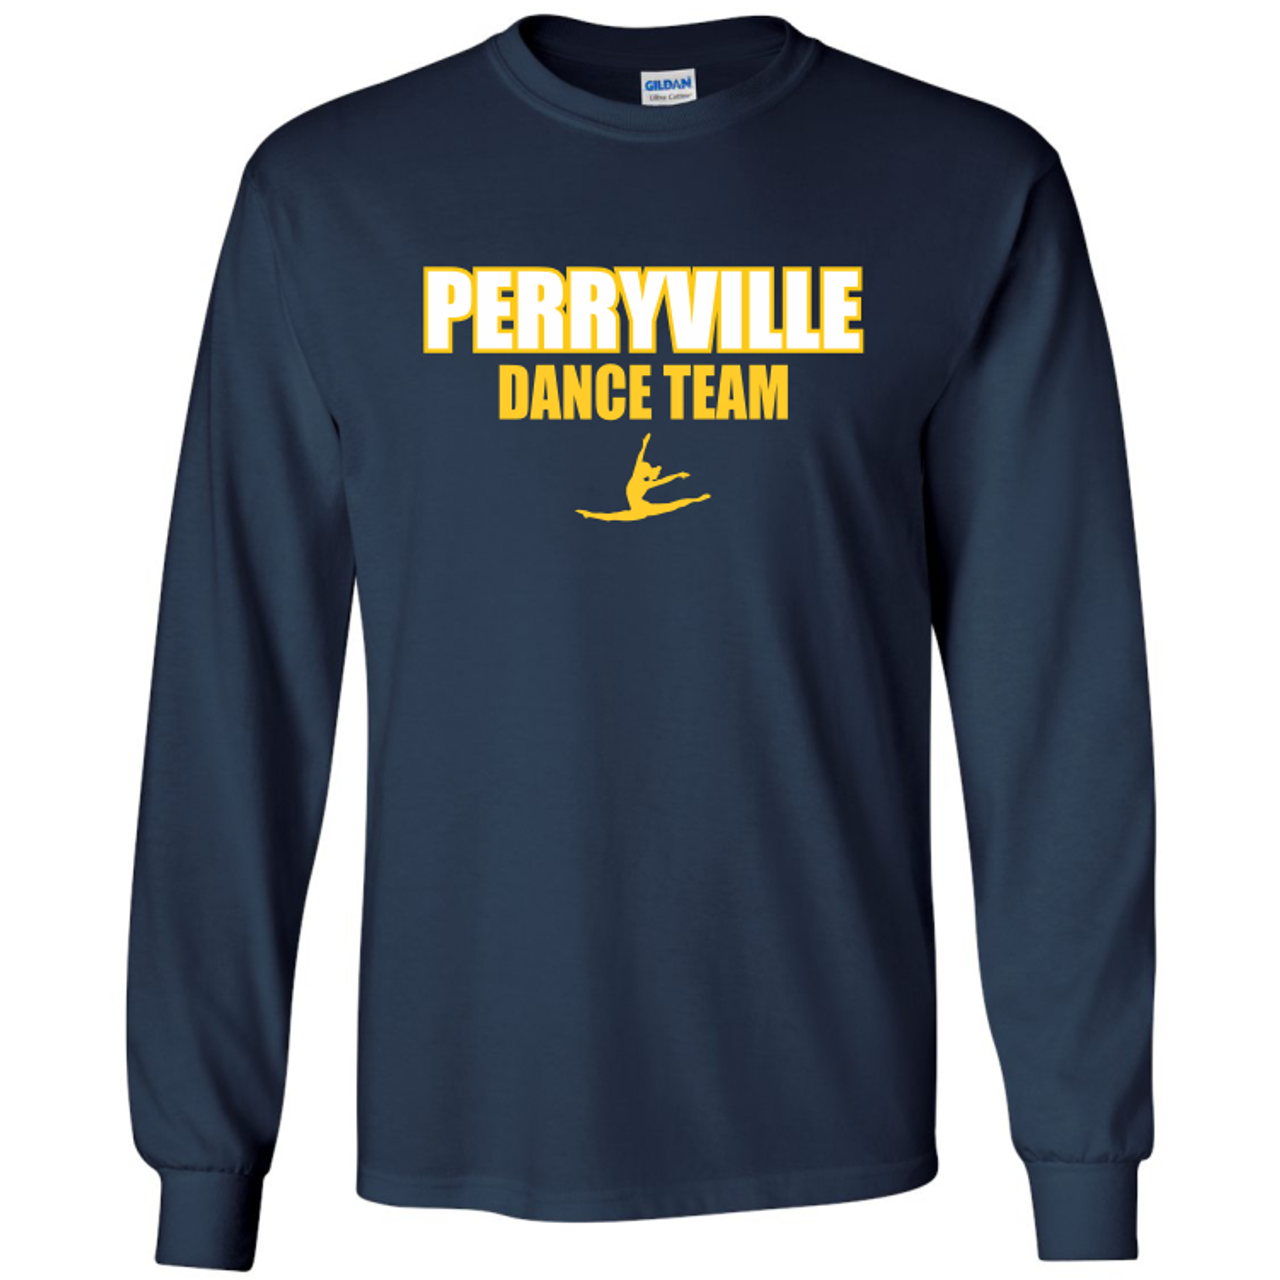 Perryville MS Dance Team T-Shirt, Navy